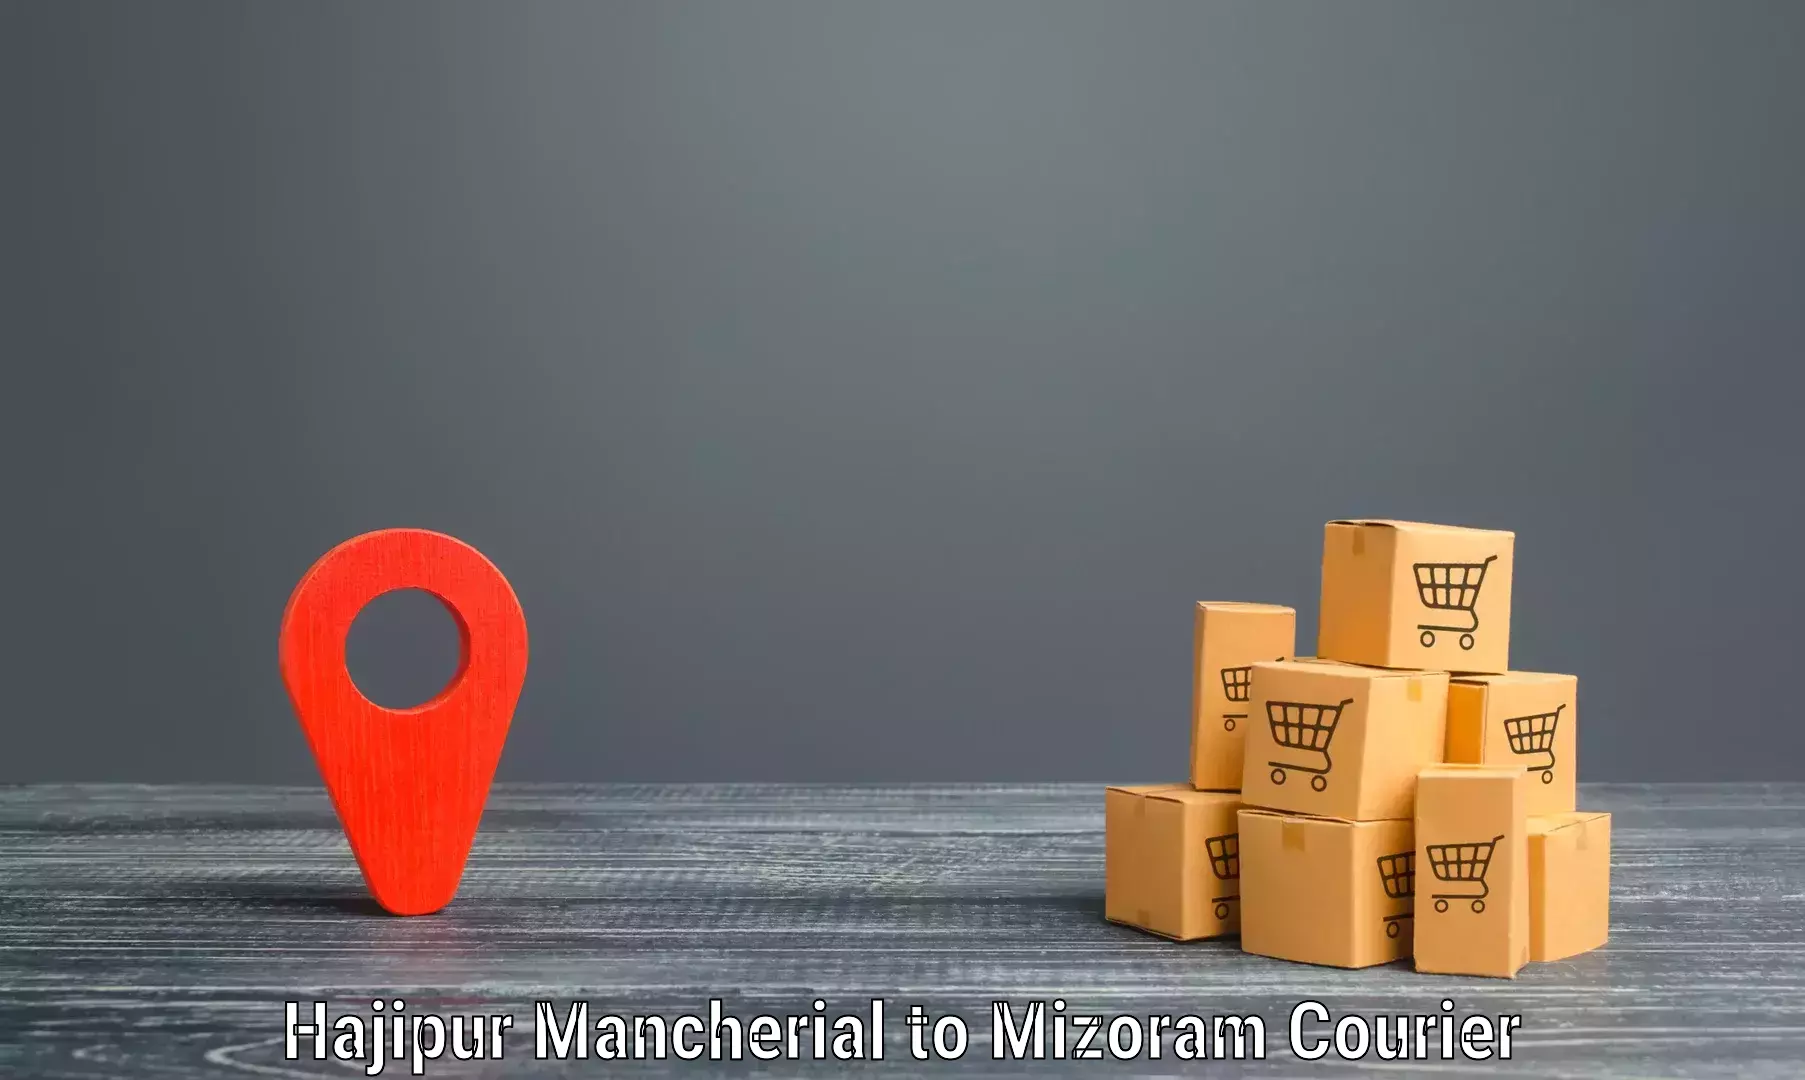 Cash on delivery service Hajipur Mancherial to Mizoram